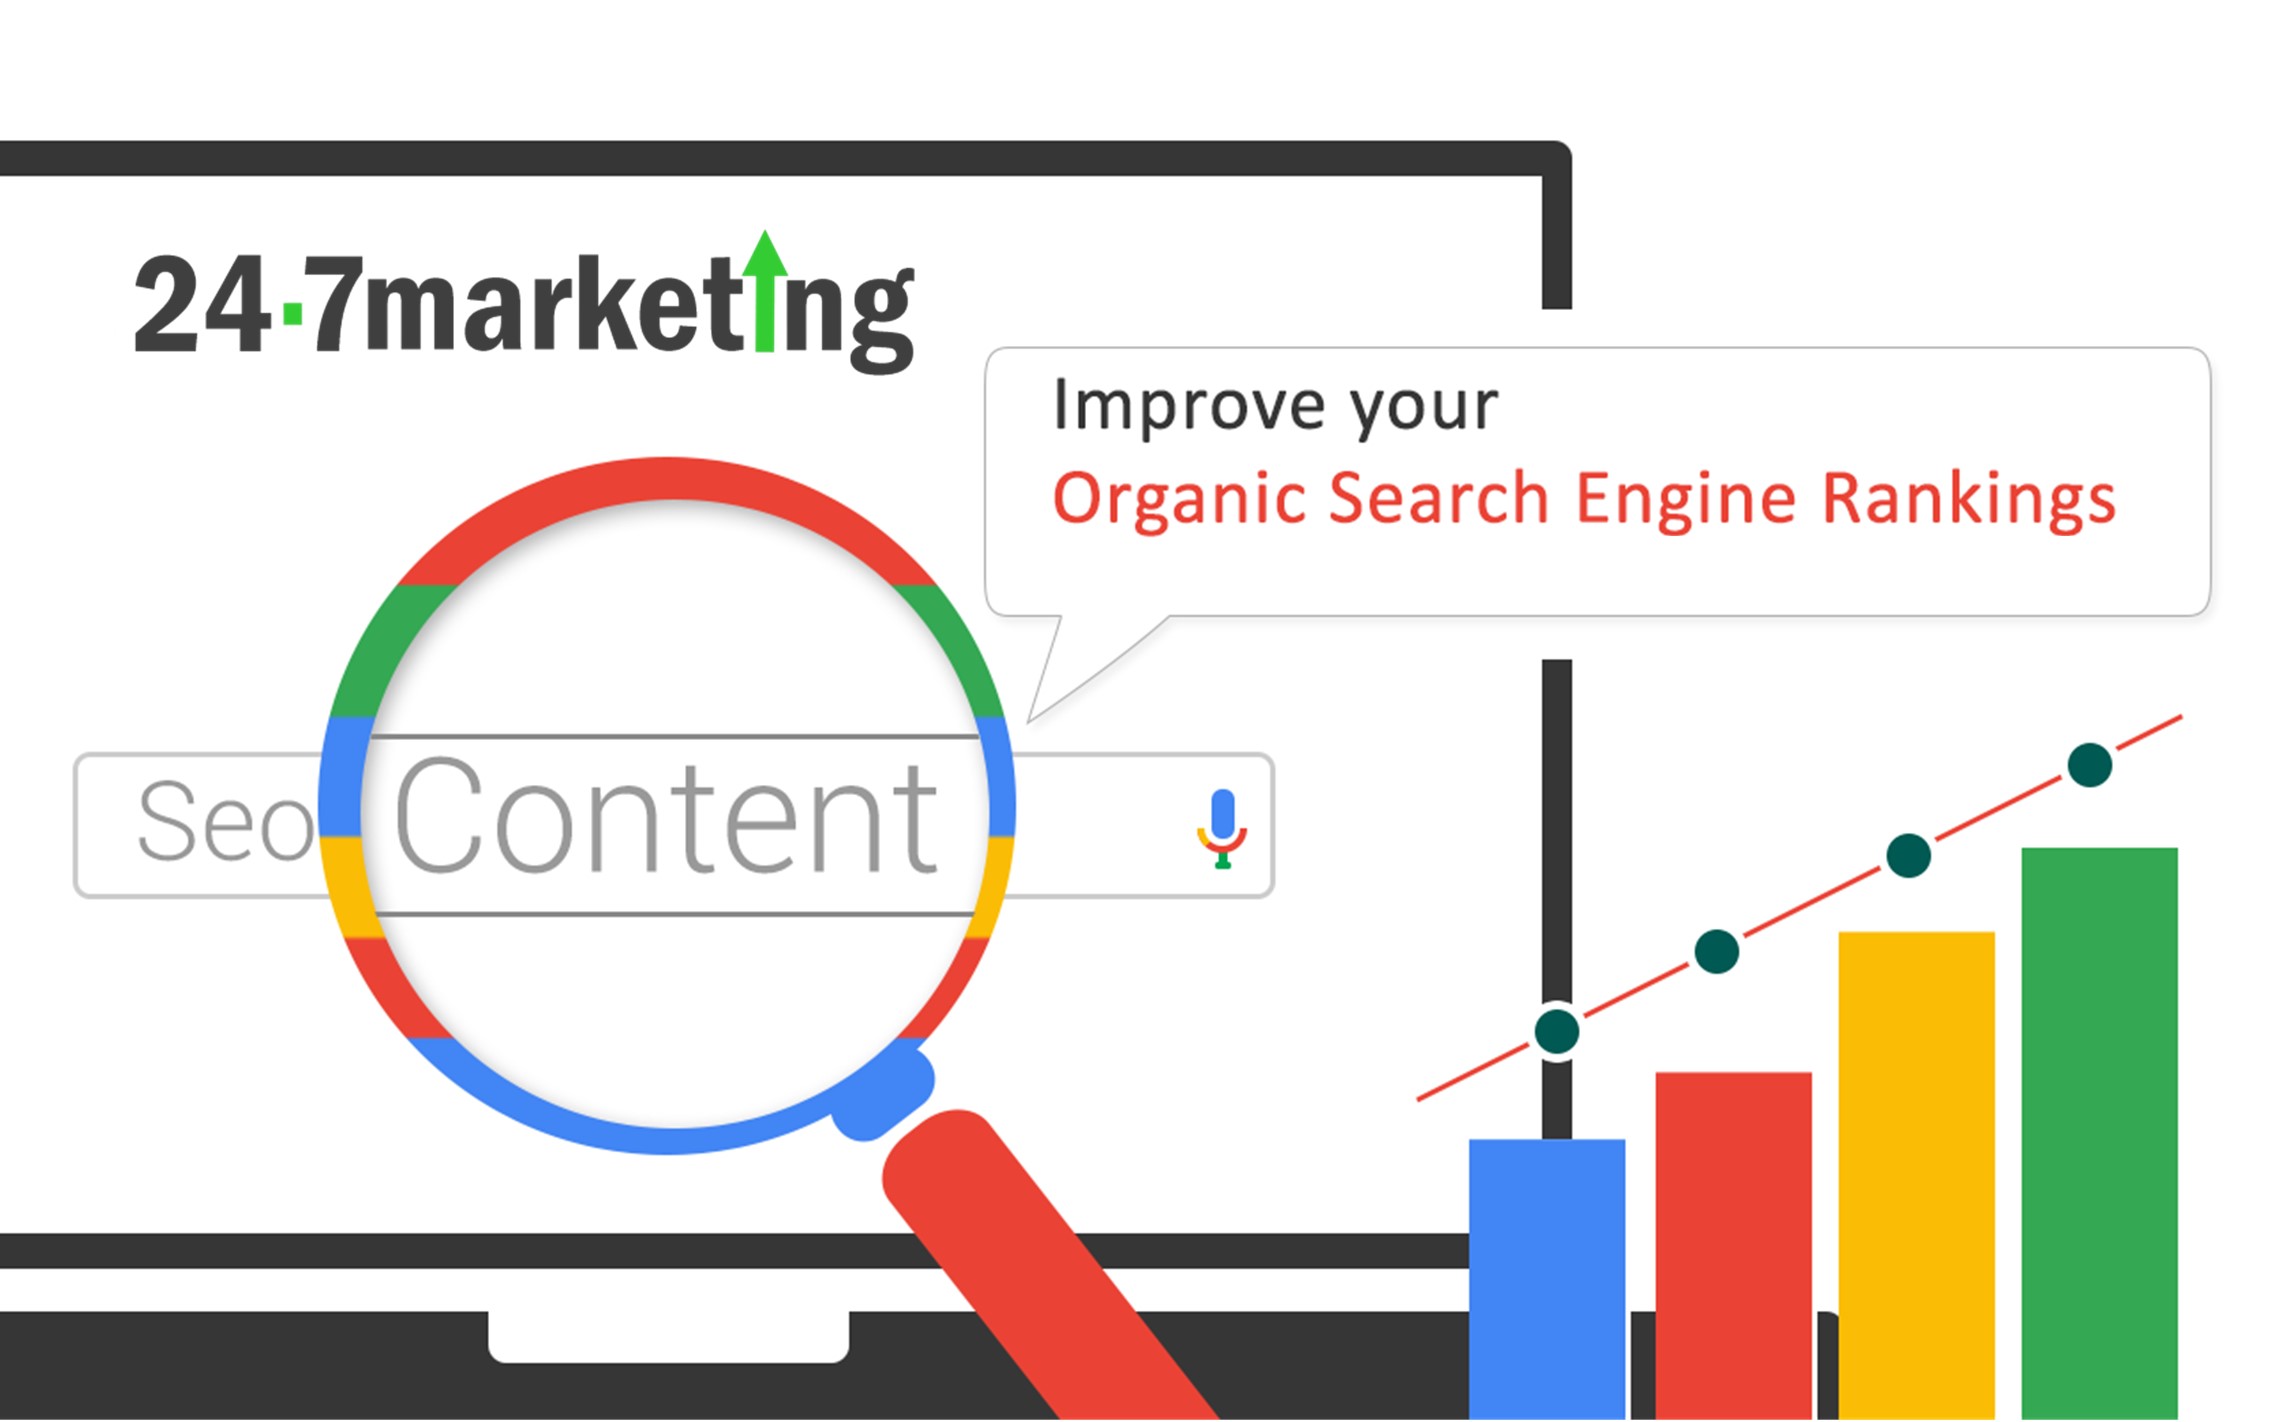 Organic Search Engine Rankings